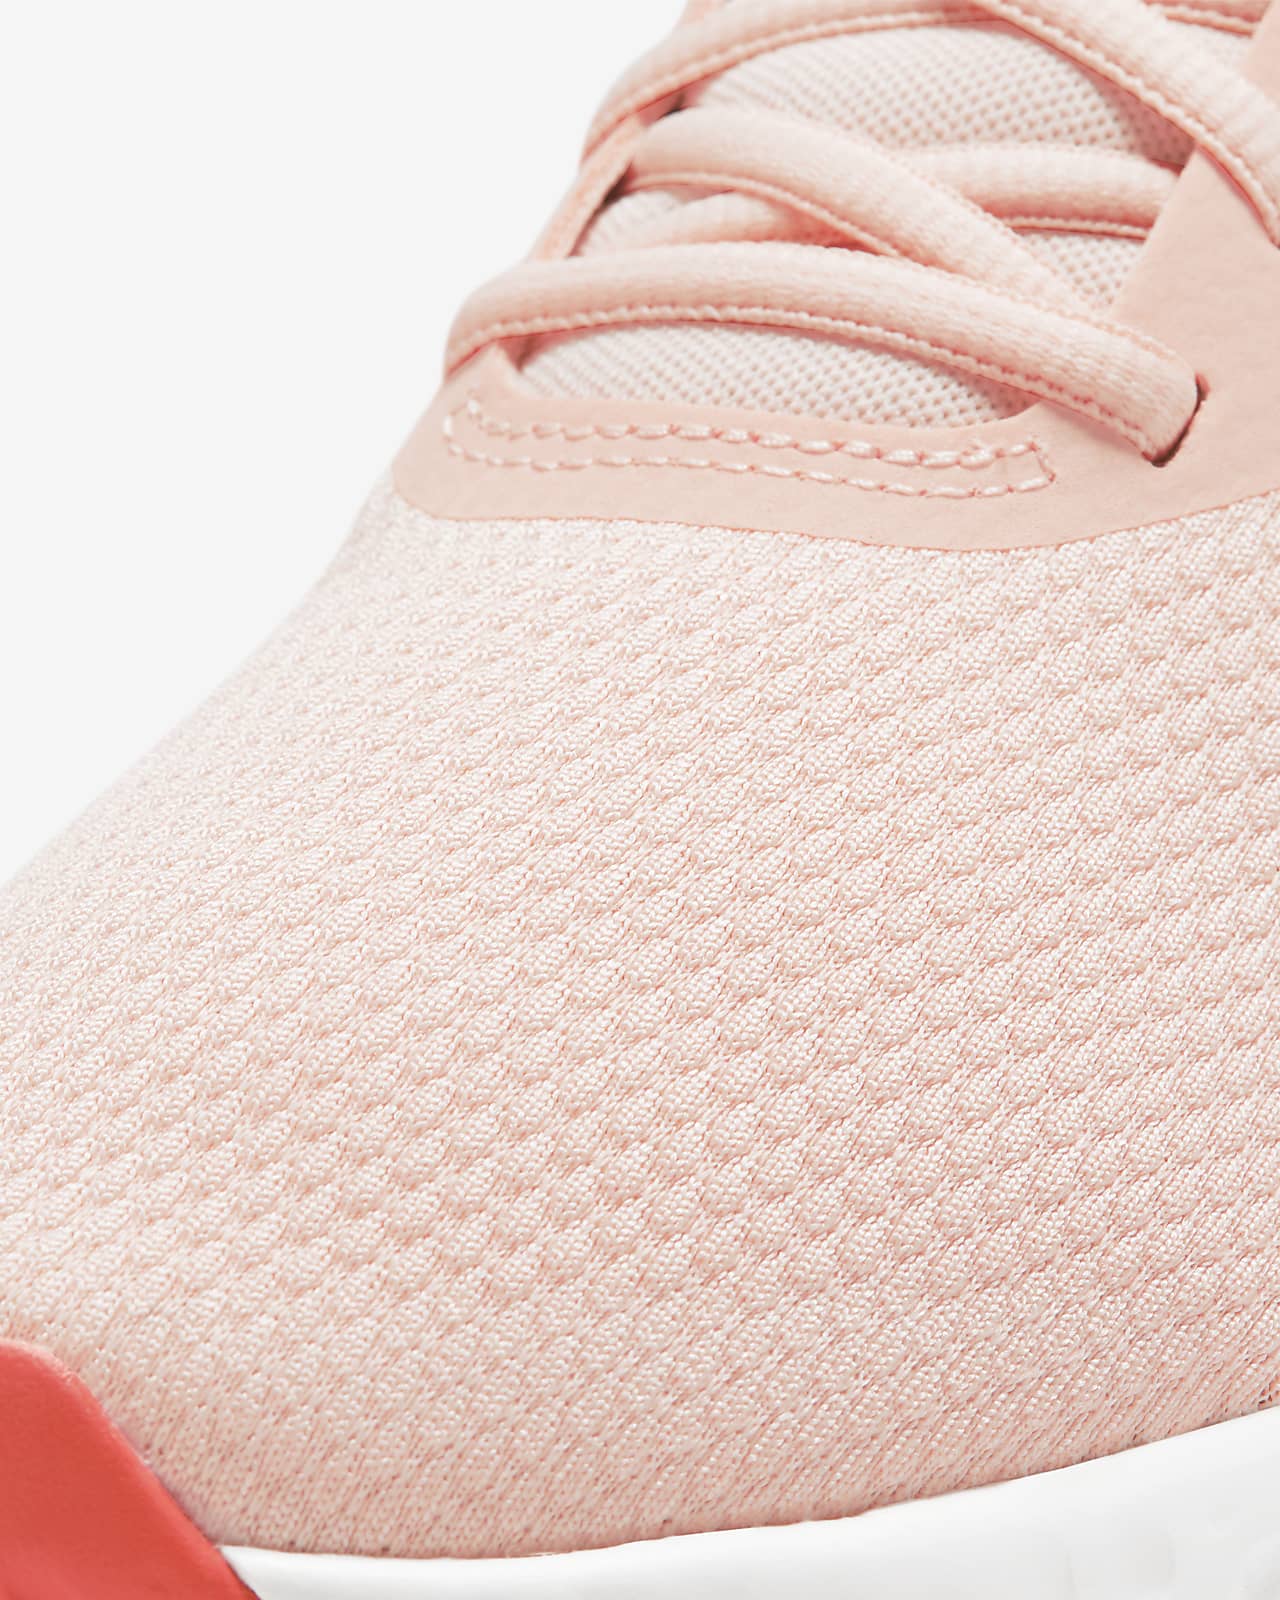 nike revolution 5 women's running shoes pink